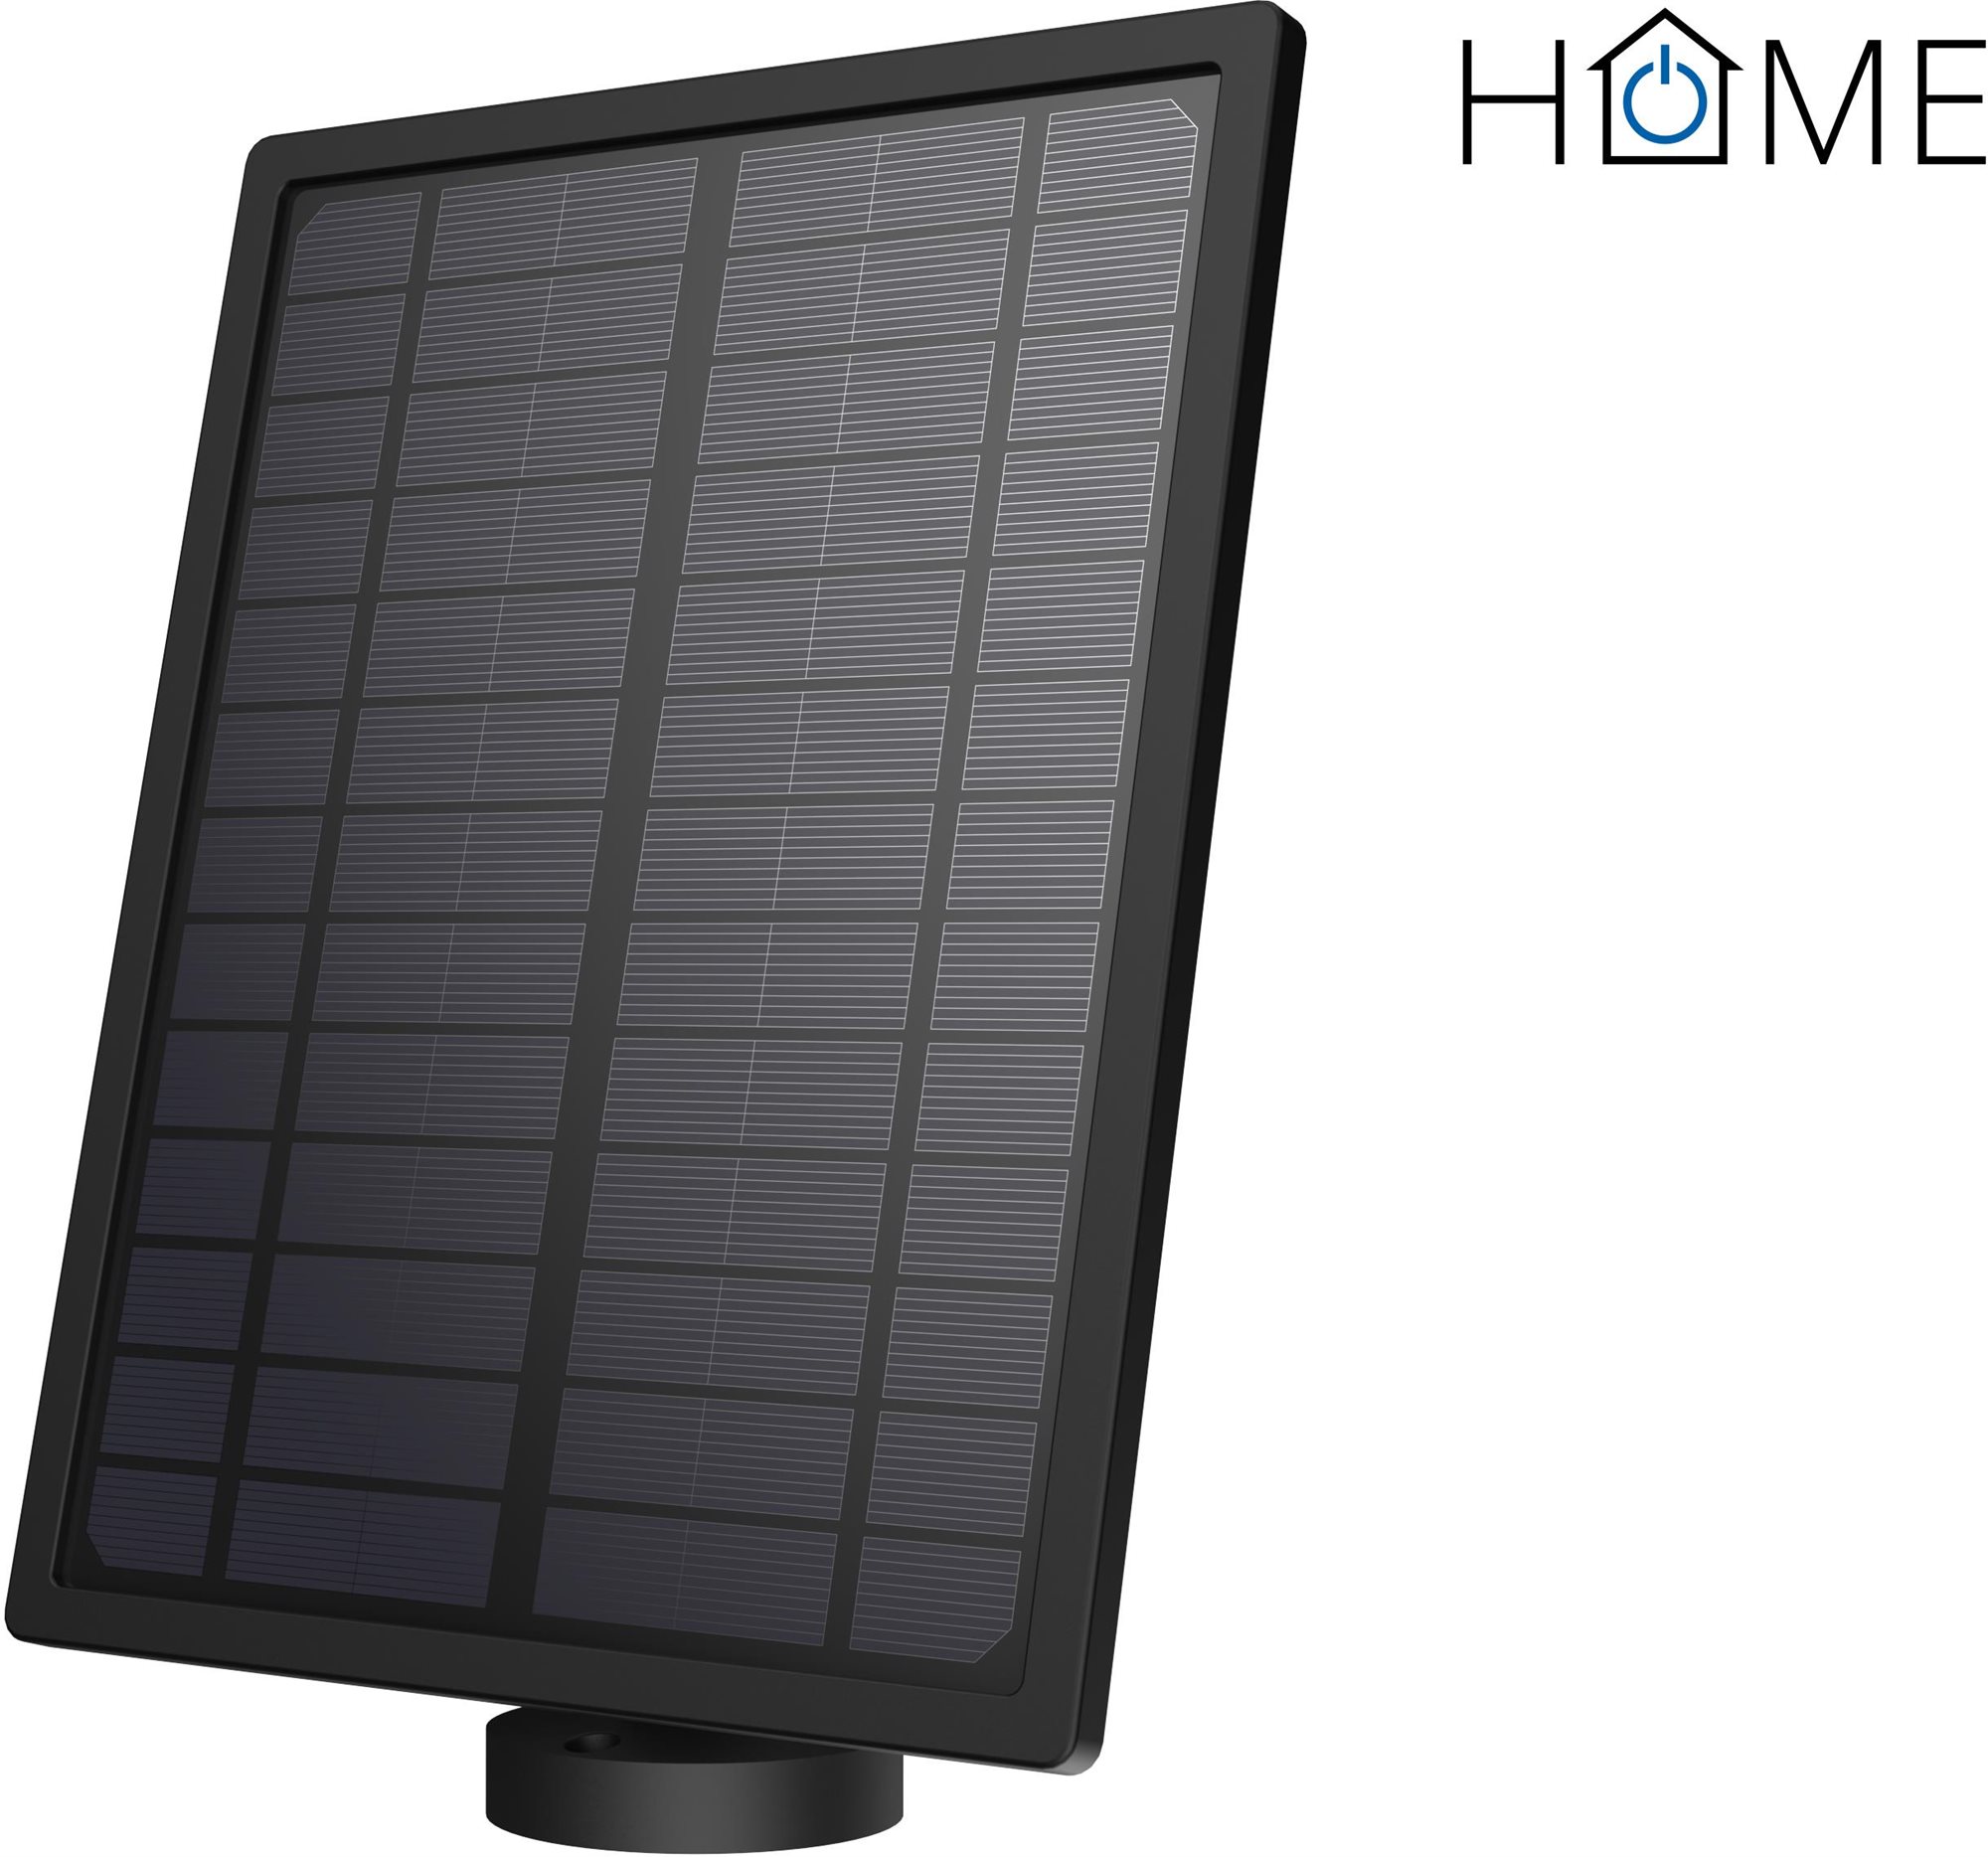 iGET HOME Solar SP2 - Univerzális 5 W-os fotovoltaikus panel microUSB porttal és 3 m-es kábellel, iG